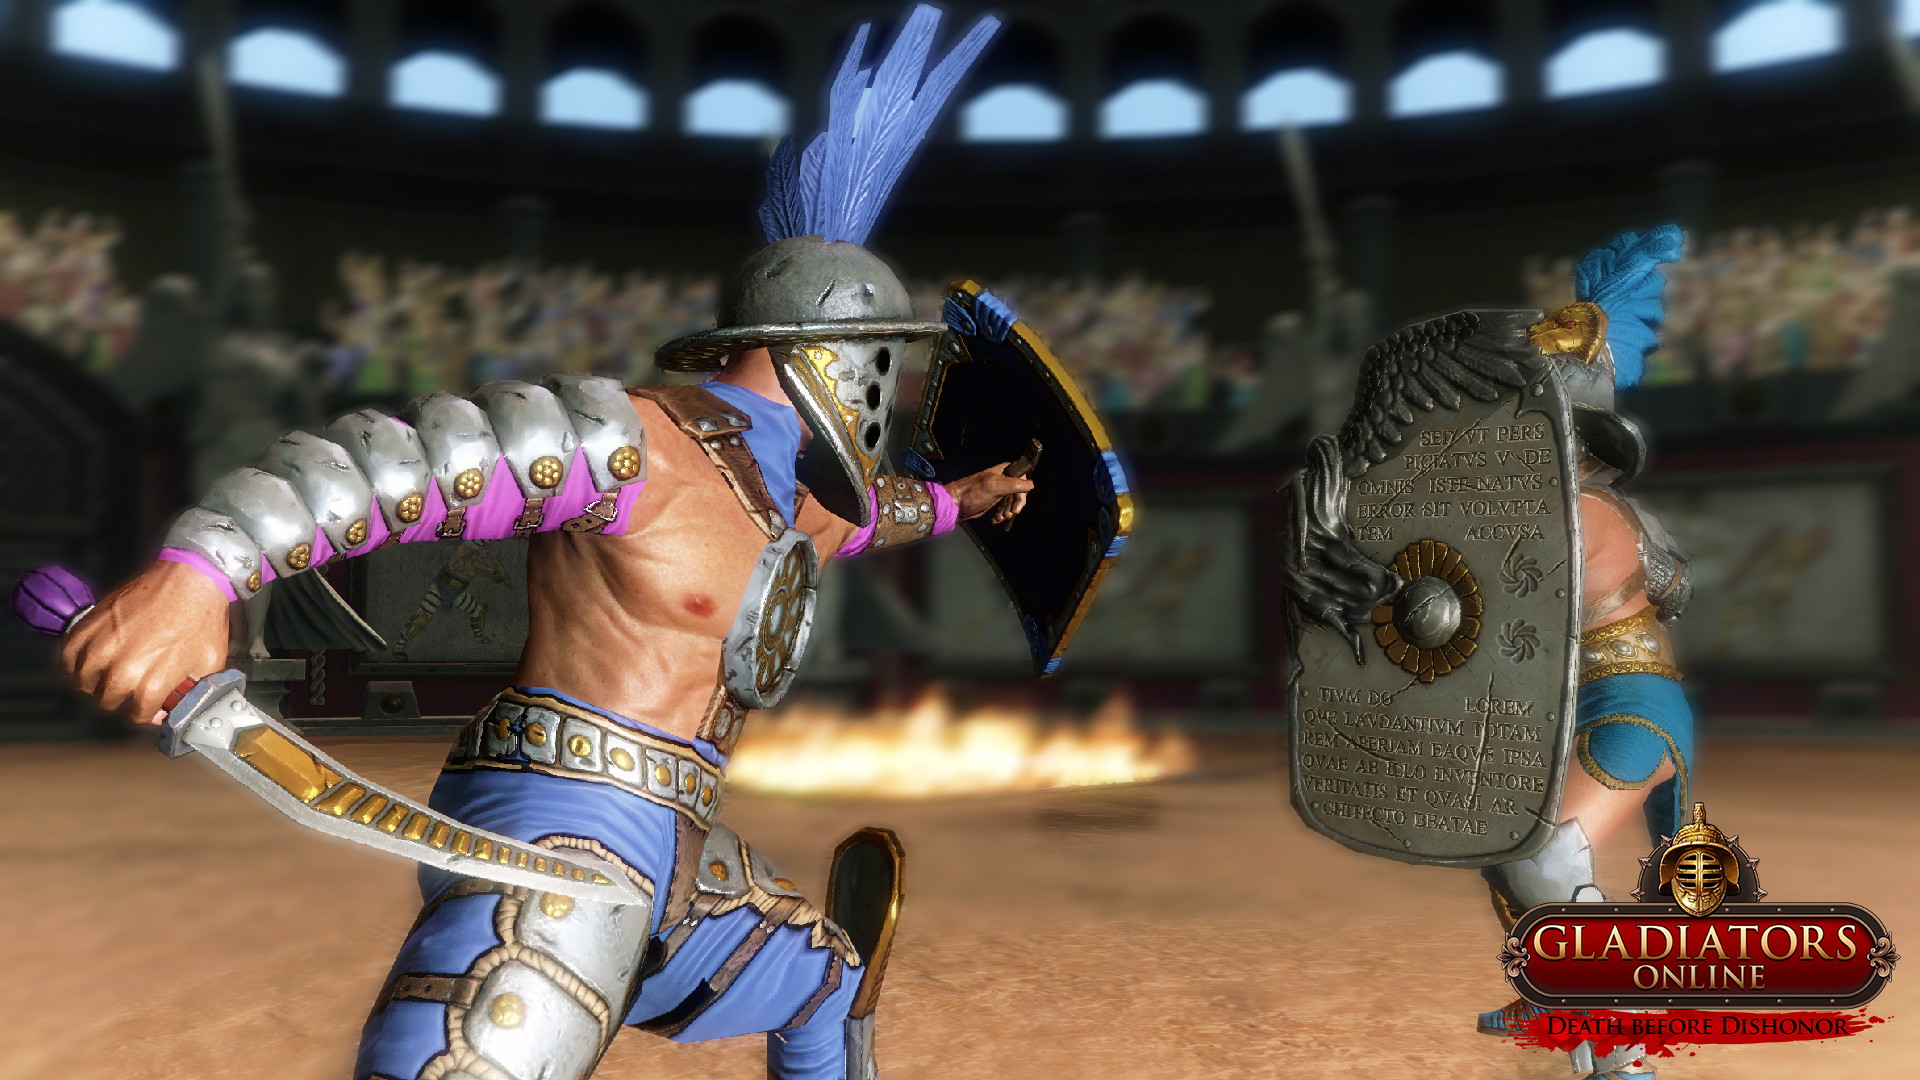 Gladiators Online: Death Before Dishonor - screenshot 17